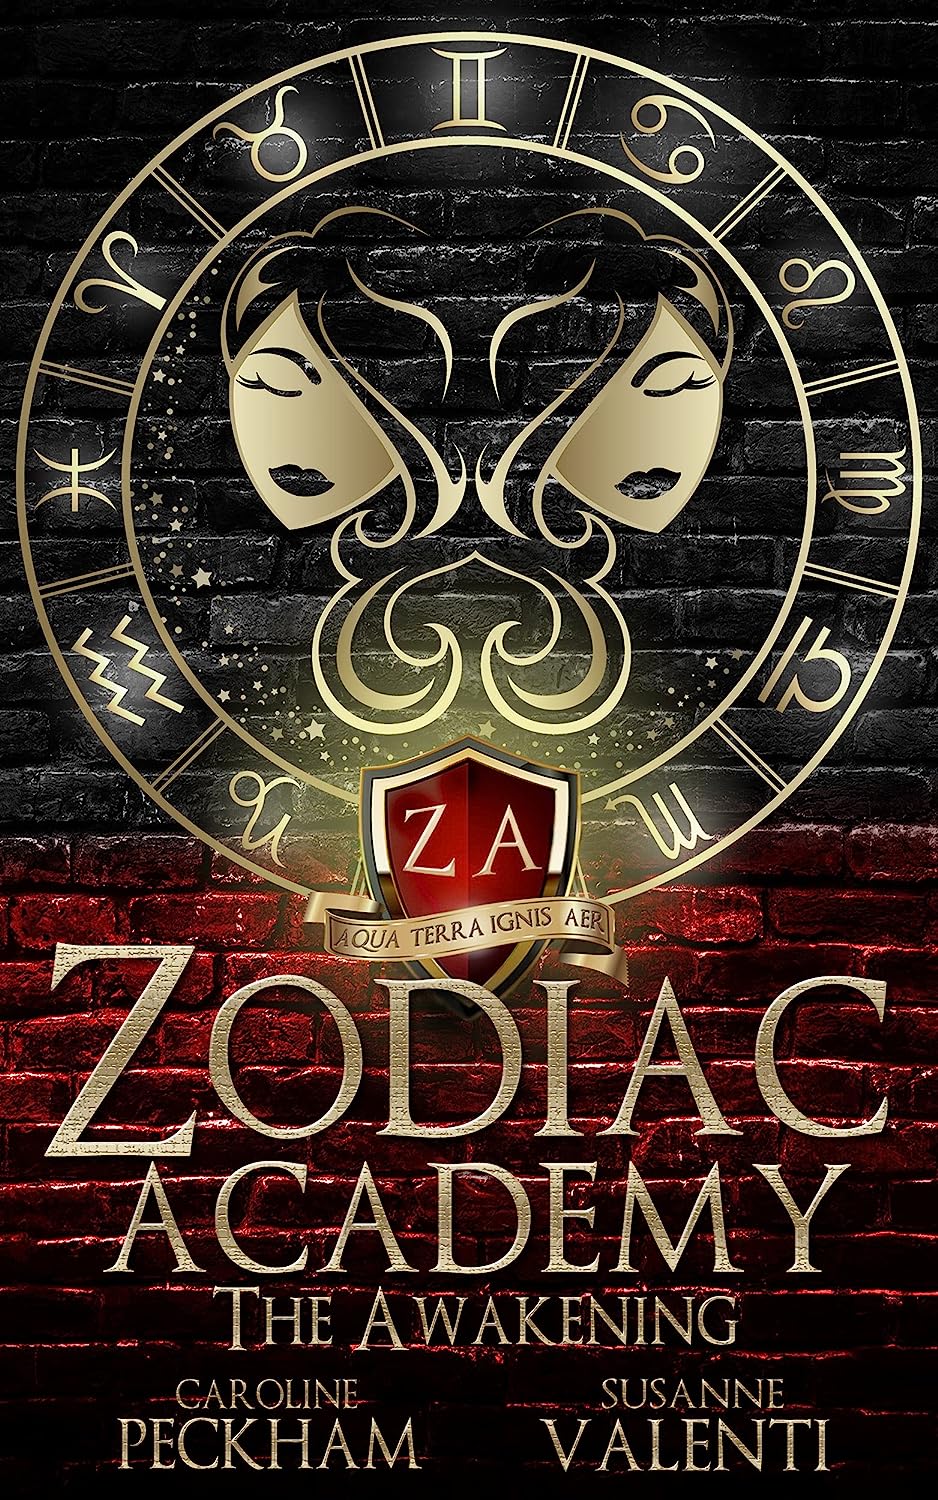 The Awakening (Zodiac Academy Book 1) by Caroline Peckham and Susanne Valenti